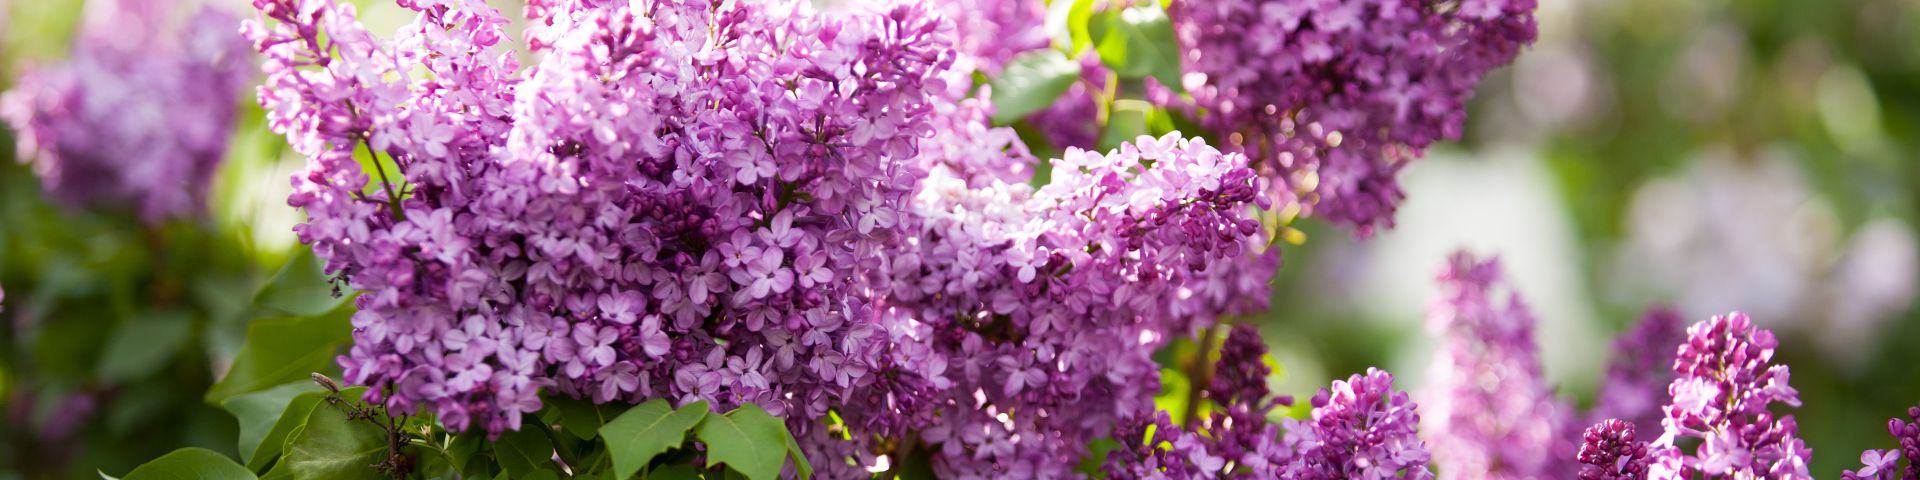 close up of a lilac bush